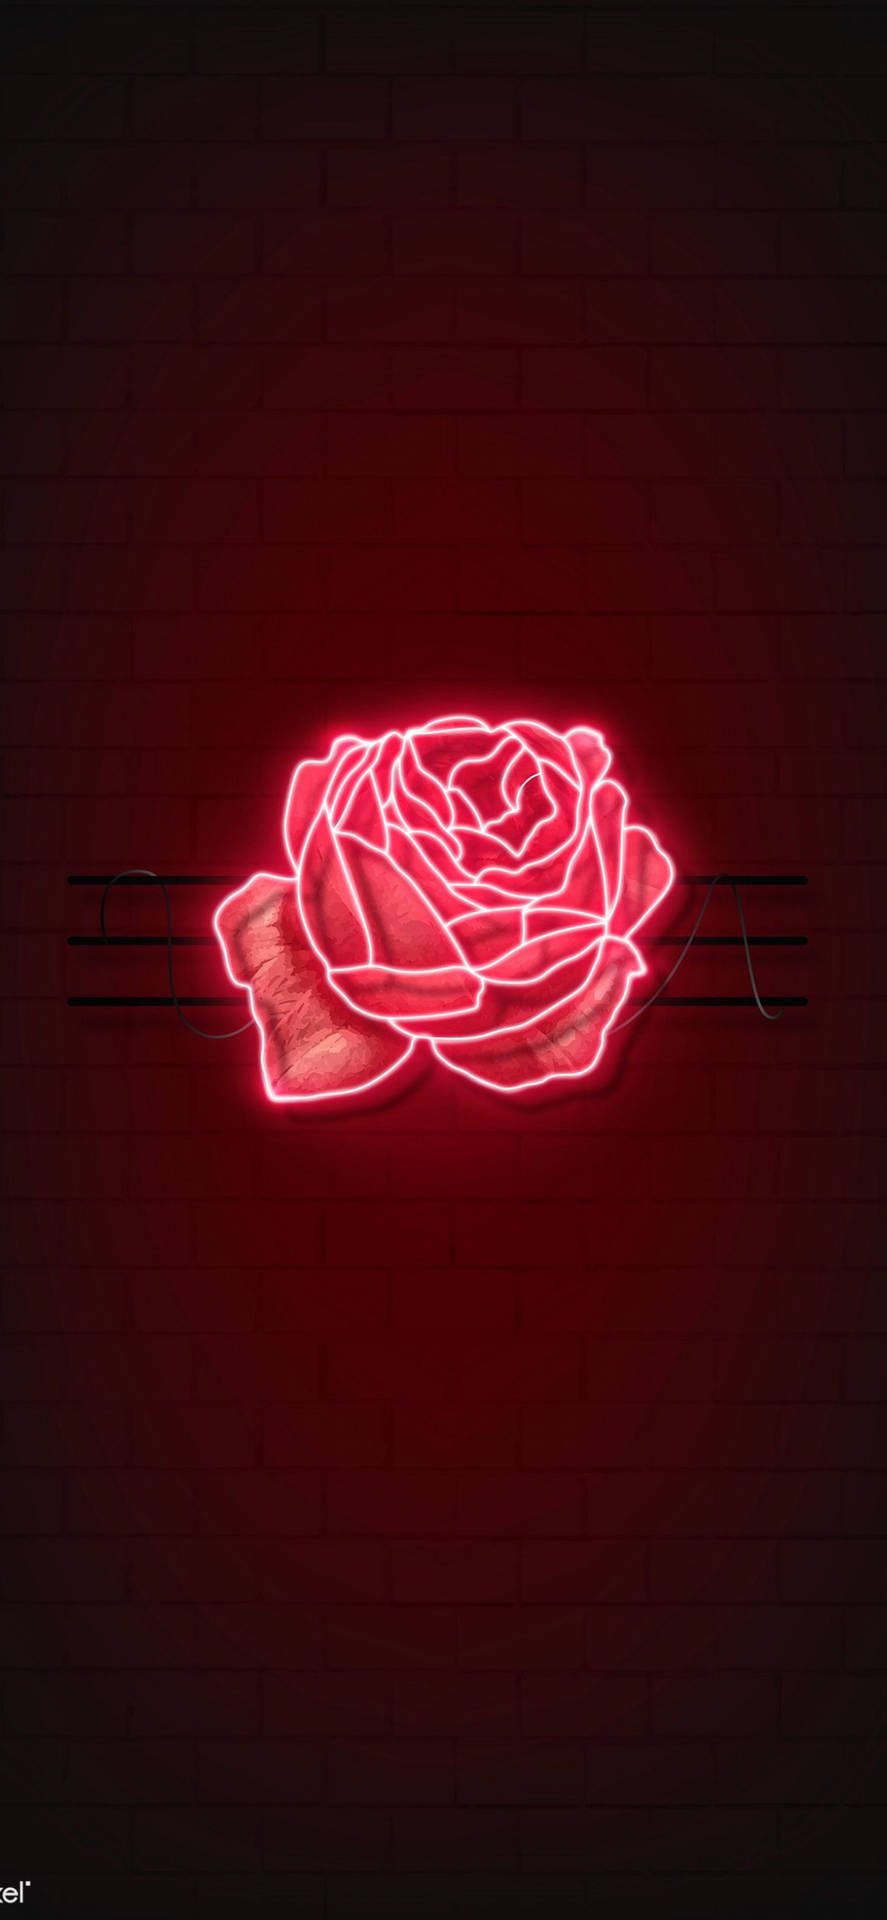 Red Rose Led Light Background